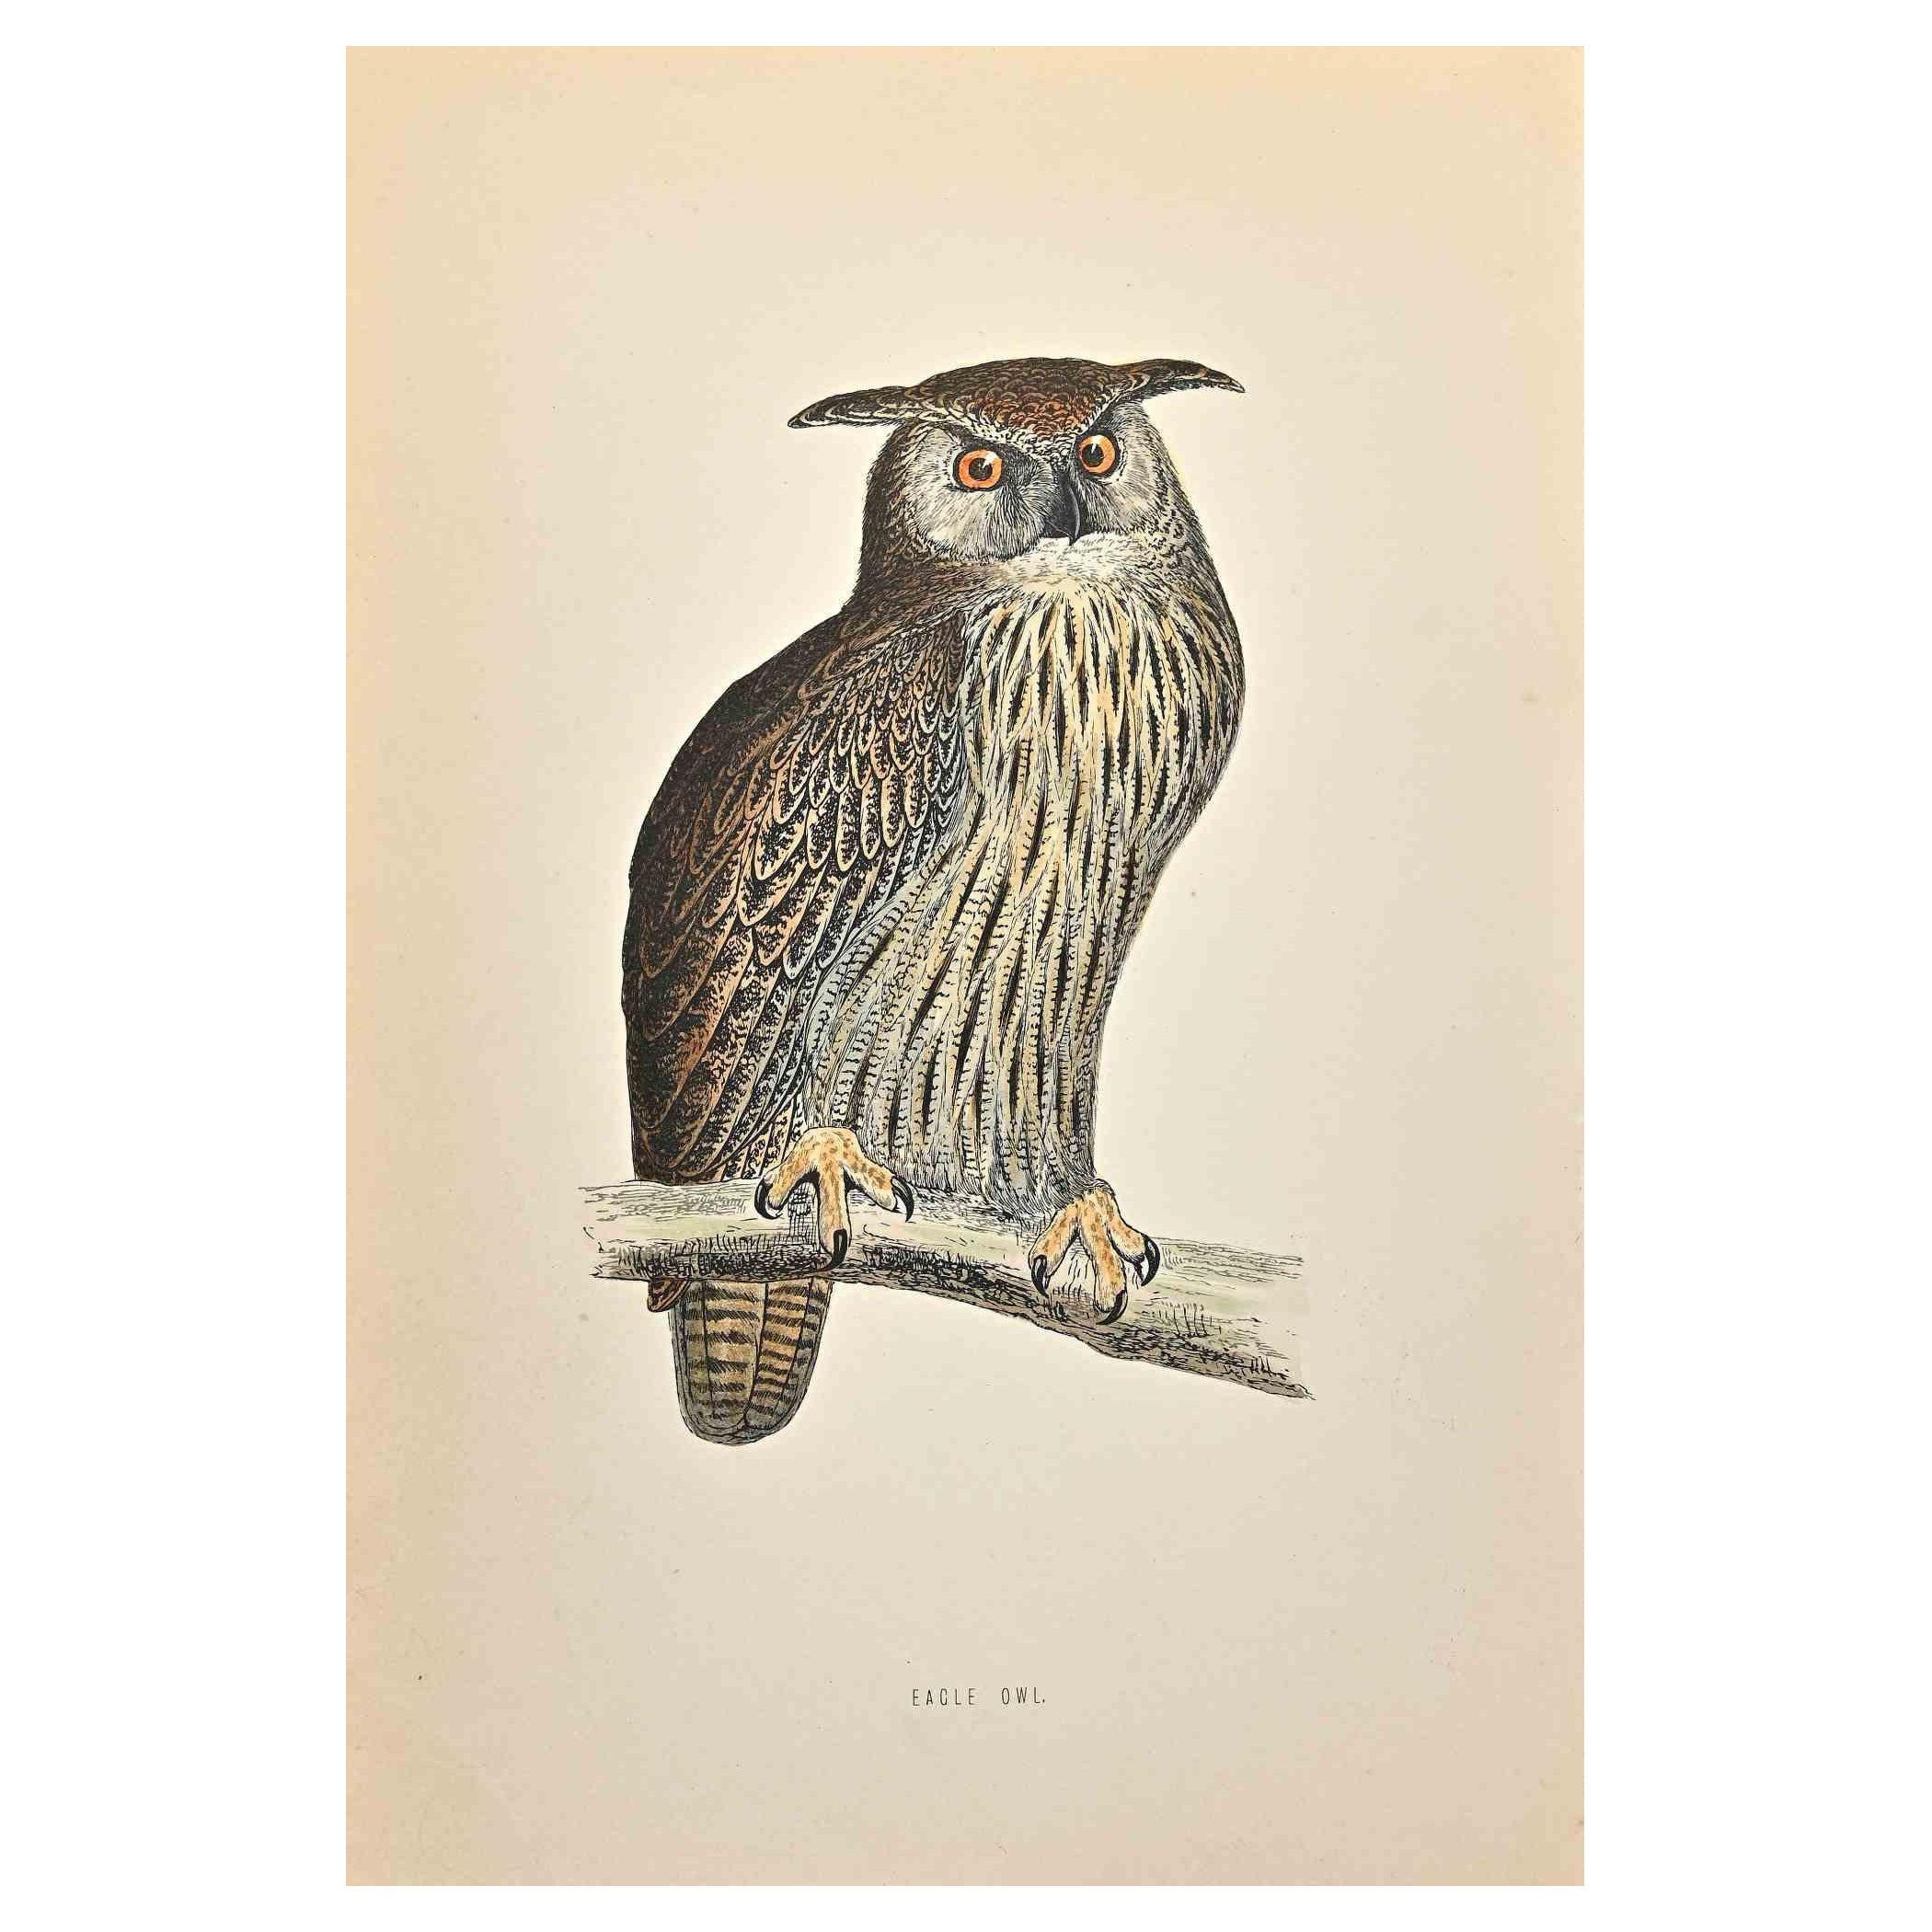 Eagle Owl - Woodcut Print by Alexander Francis Lydon  - 1870